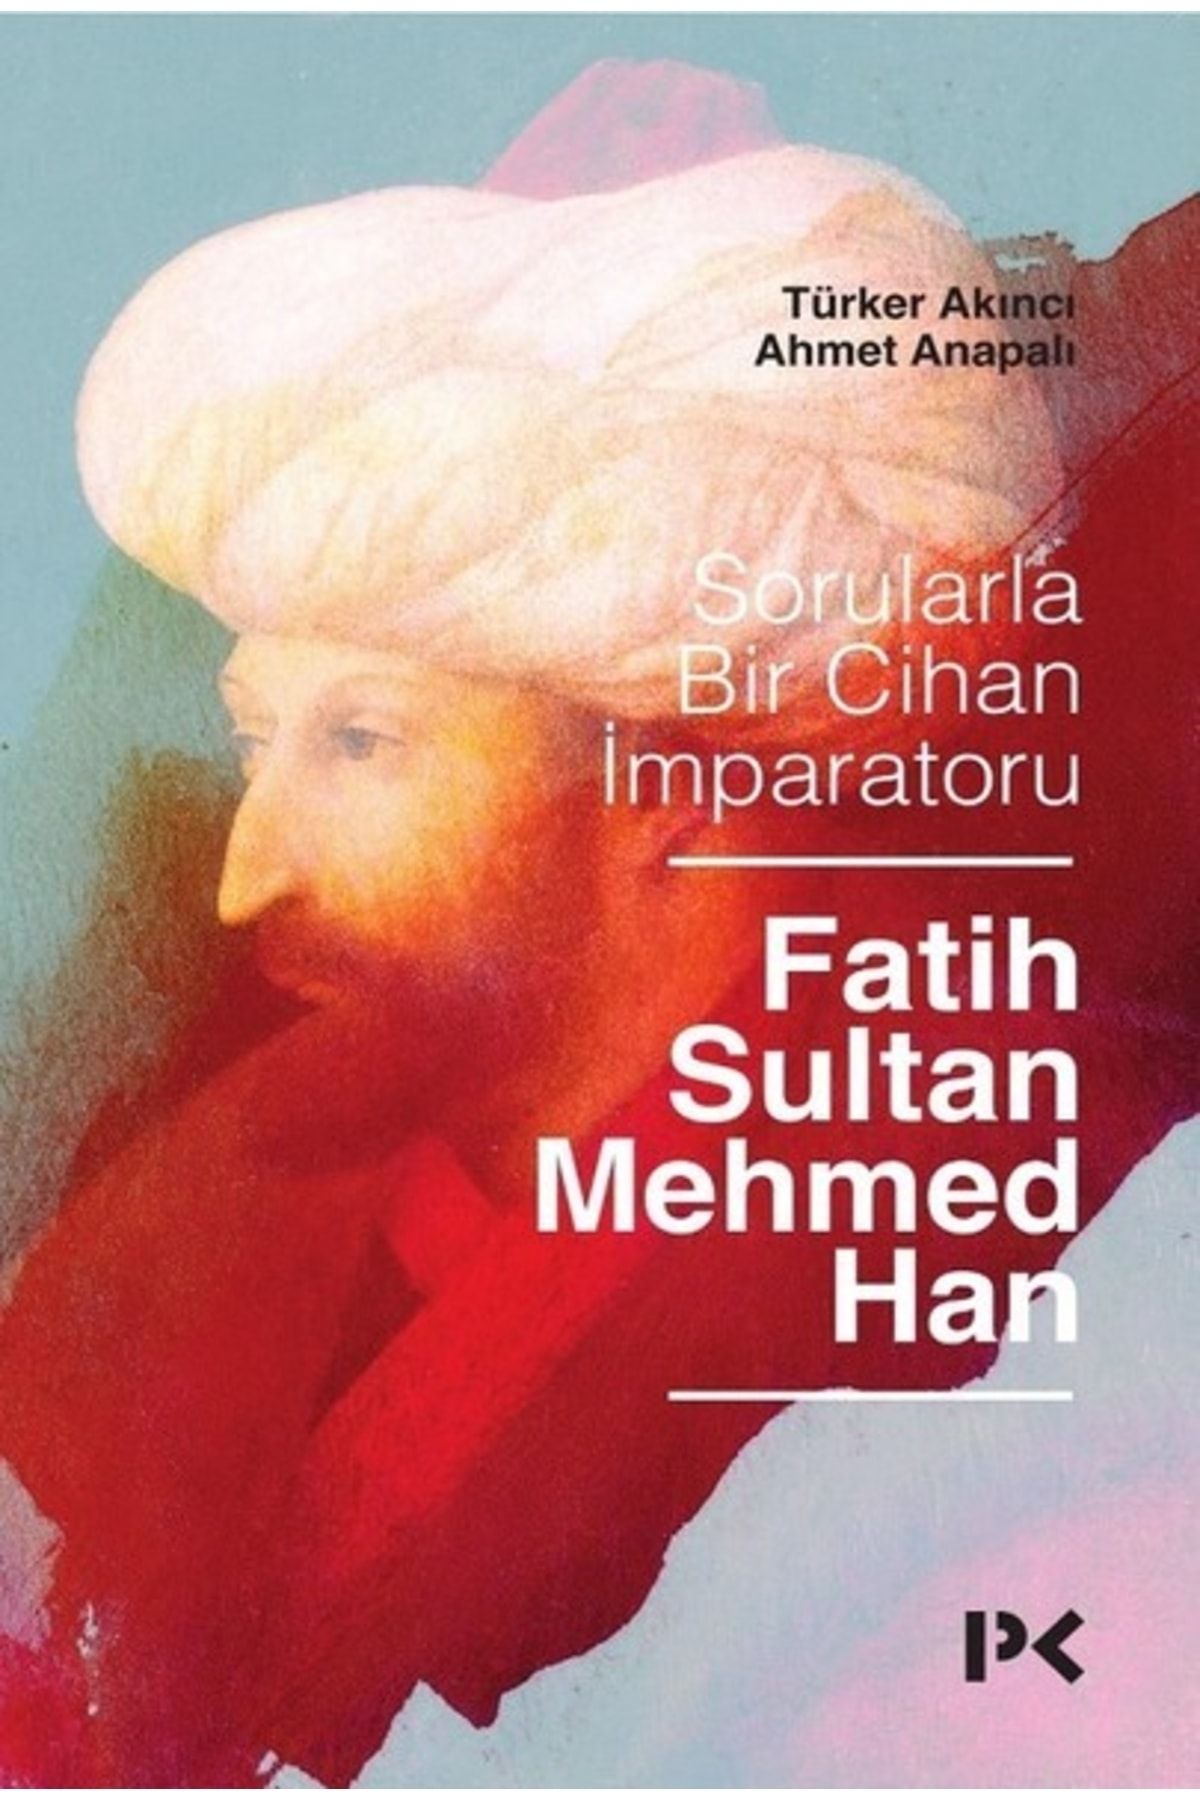 Profil Kitap Sorularla Bir Cihan Imparatoru Fatih Sultan Mehmed Han